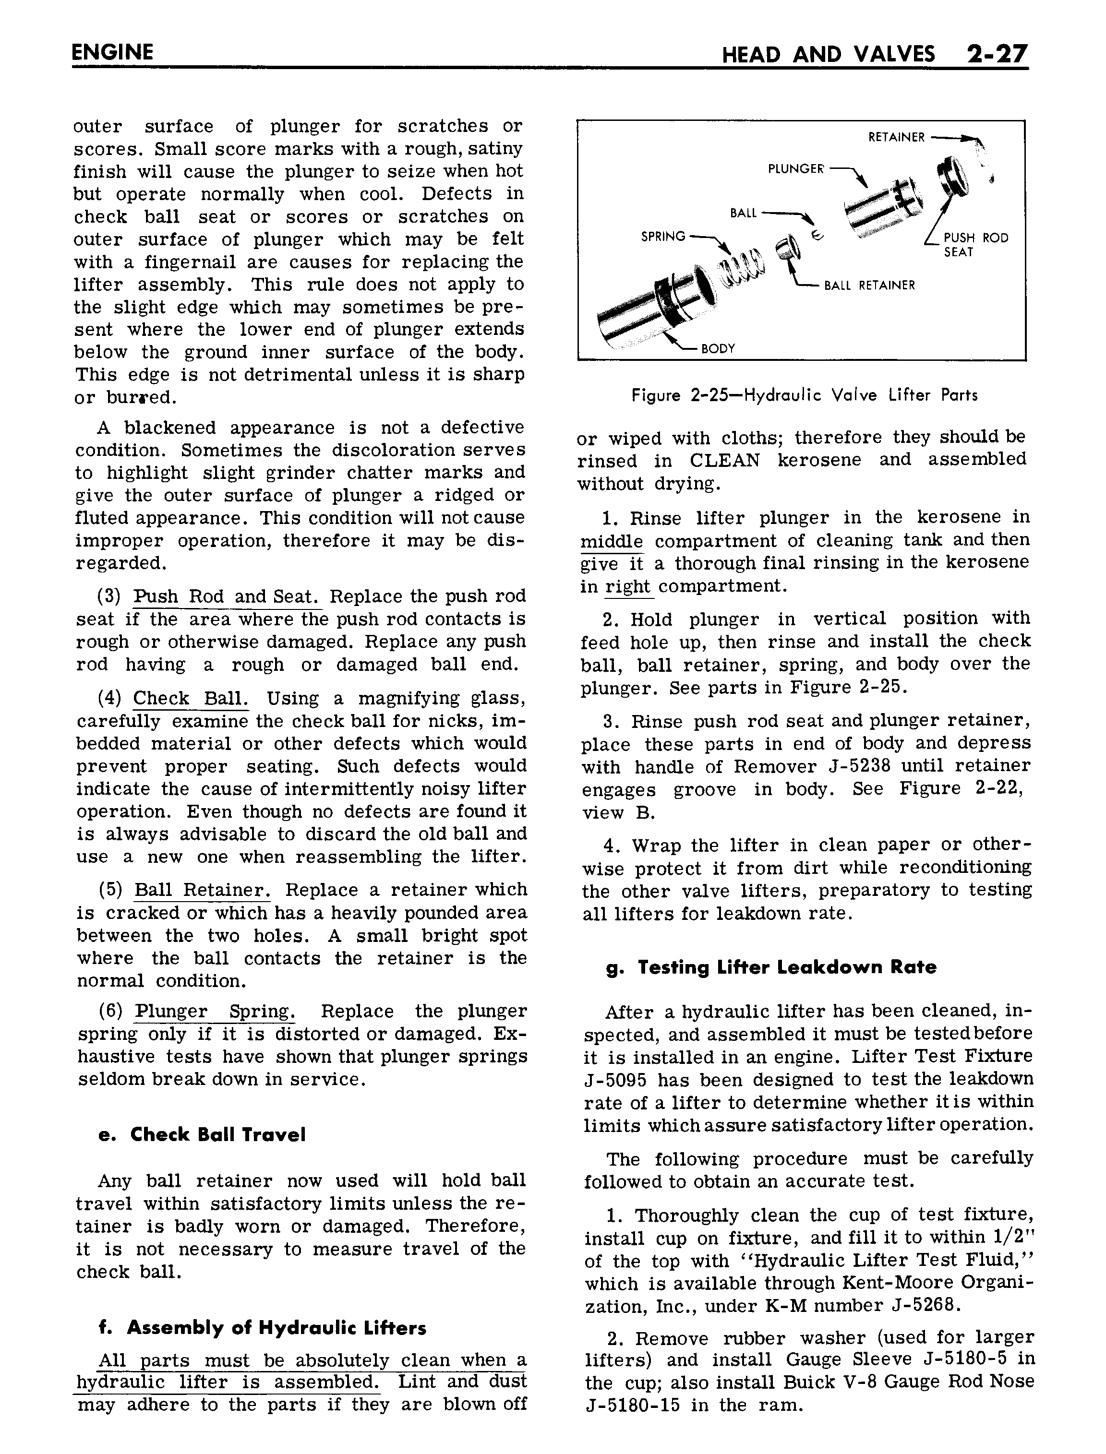 n_03 1961 Buick Shop Manual - Engine-027-027.jpg